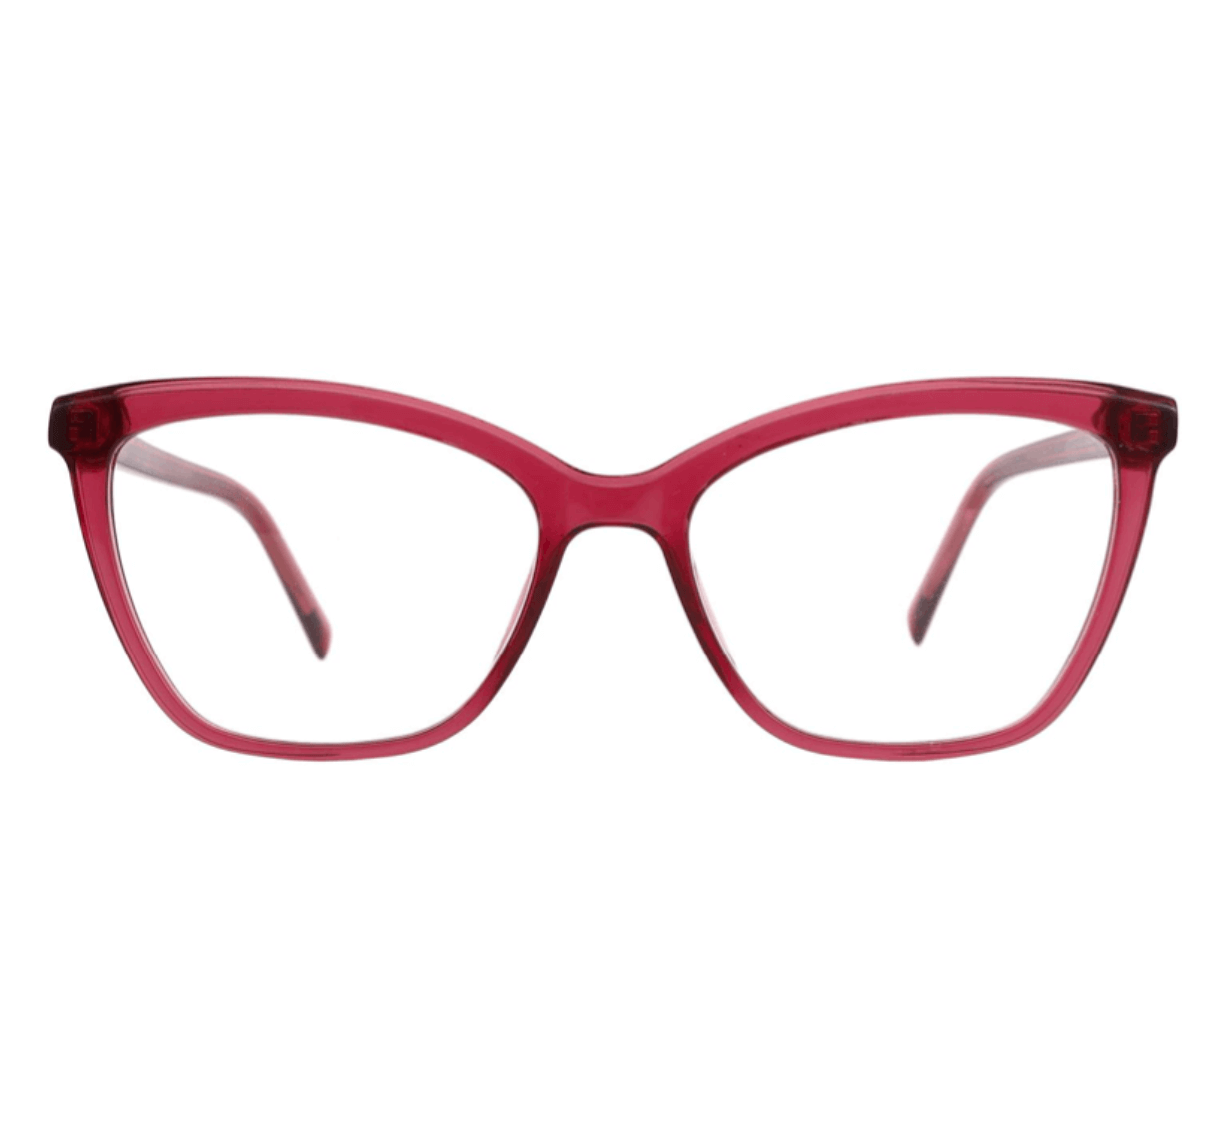 Eyewear frame acetate, eyeglass frames manufacturers, optical frames wholesale suppliers, custom glasses frames